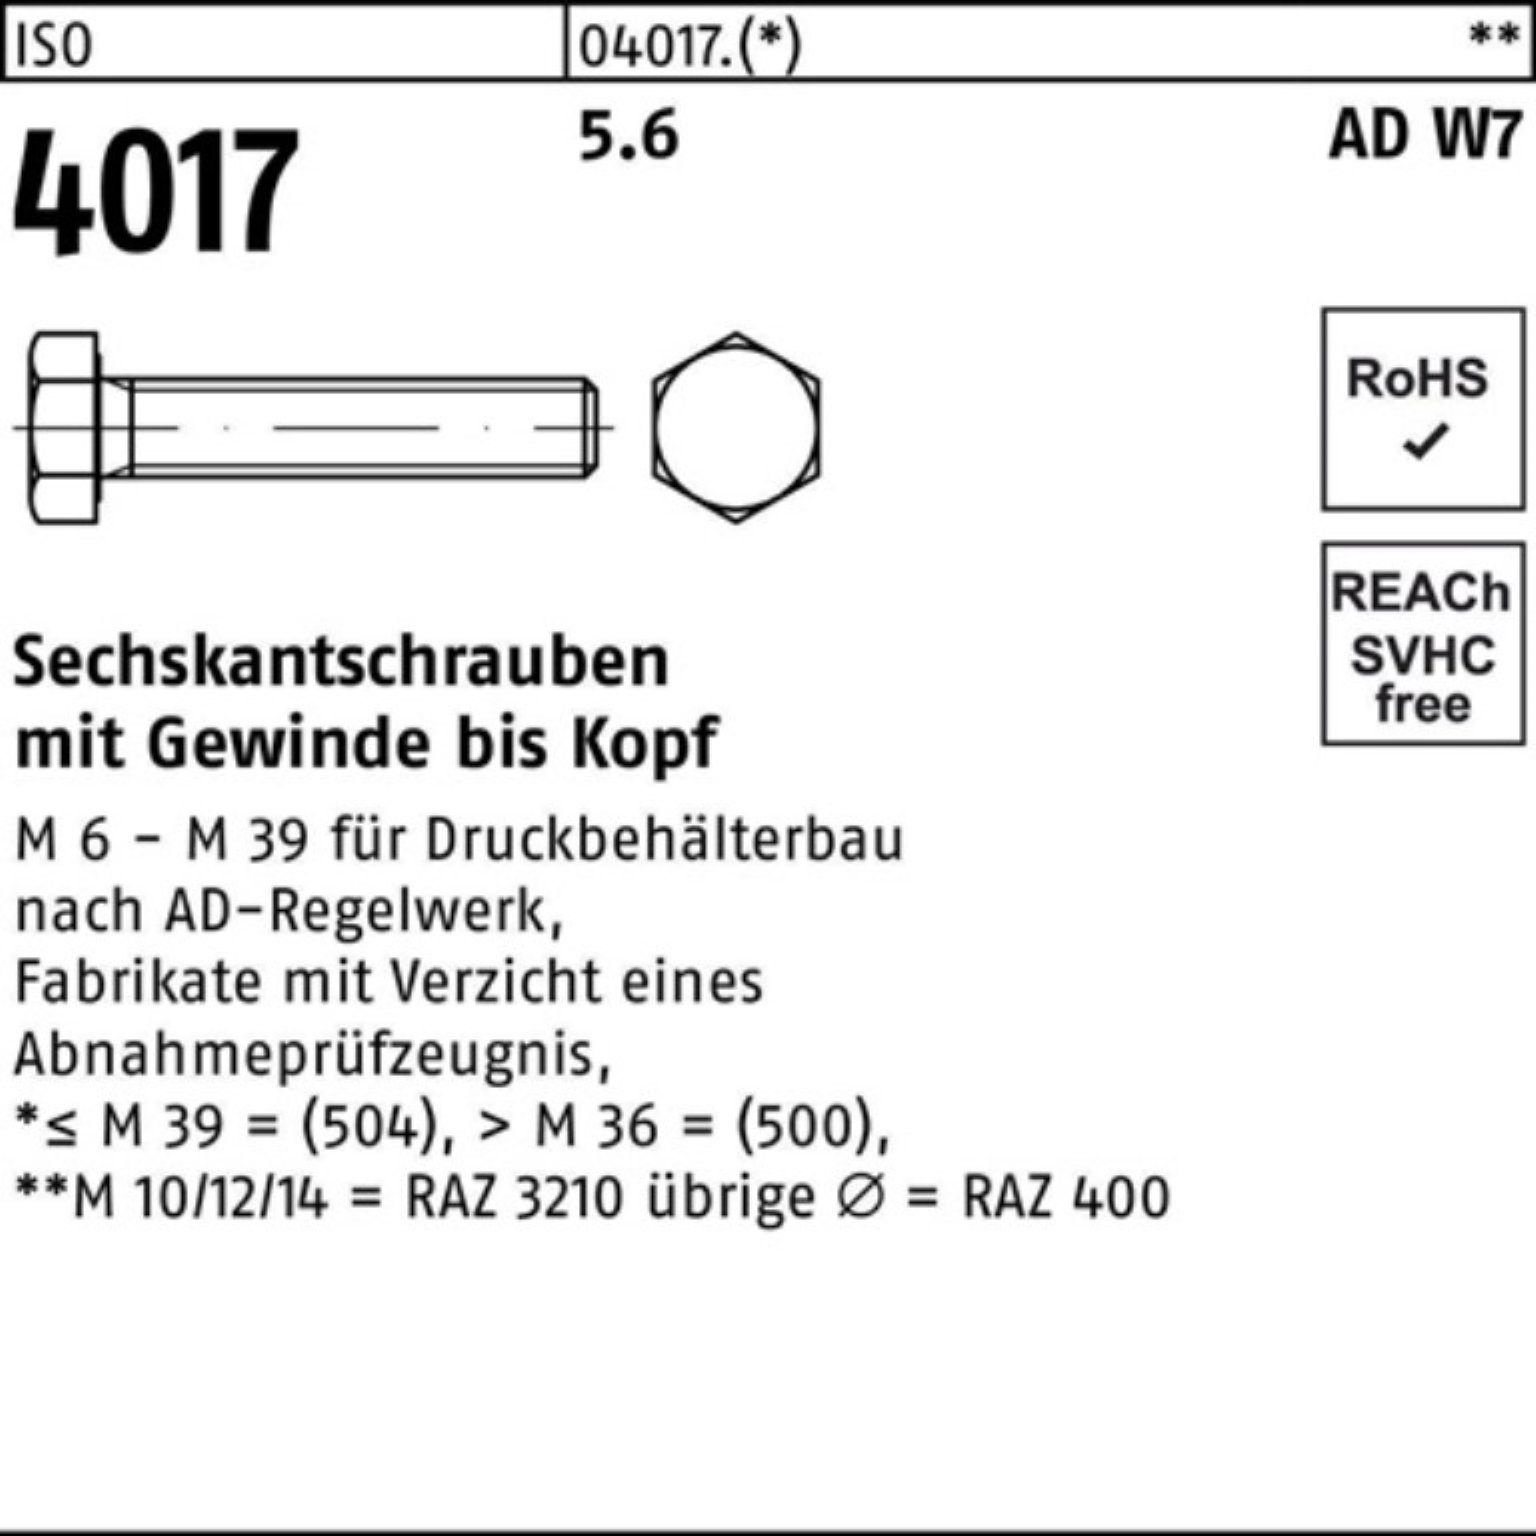 Bufab Sechskantschraube 100er Pack 150 Sechskantschraube 25 Stück VG W7 ISO AD 5.6 M20x 4017